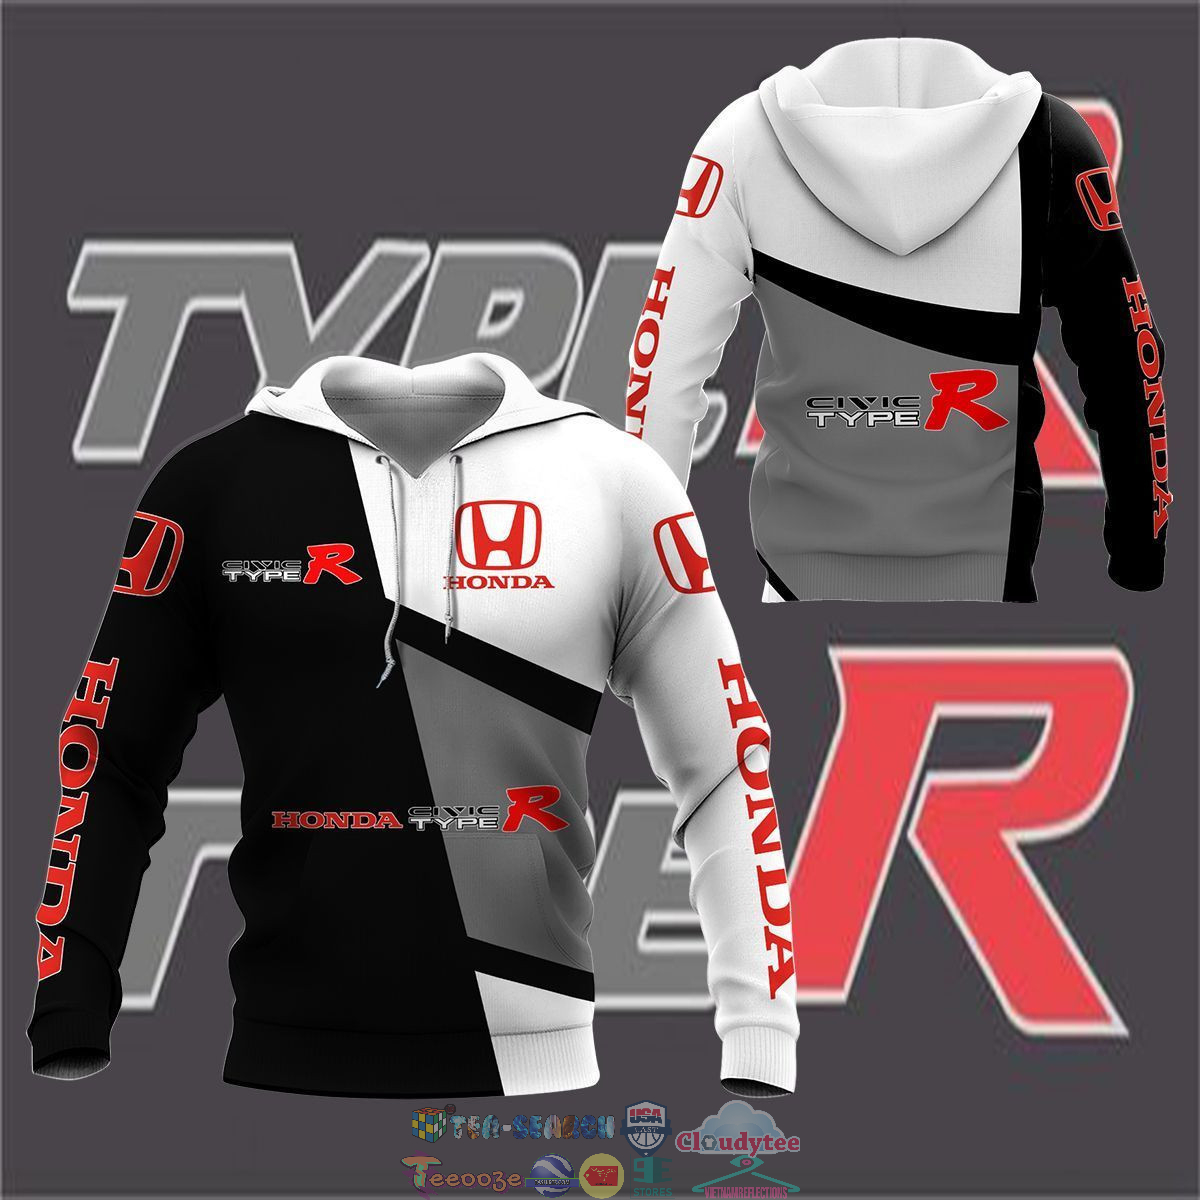 Honda Civic Type R ver 2 3D hoodie and t-shirt